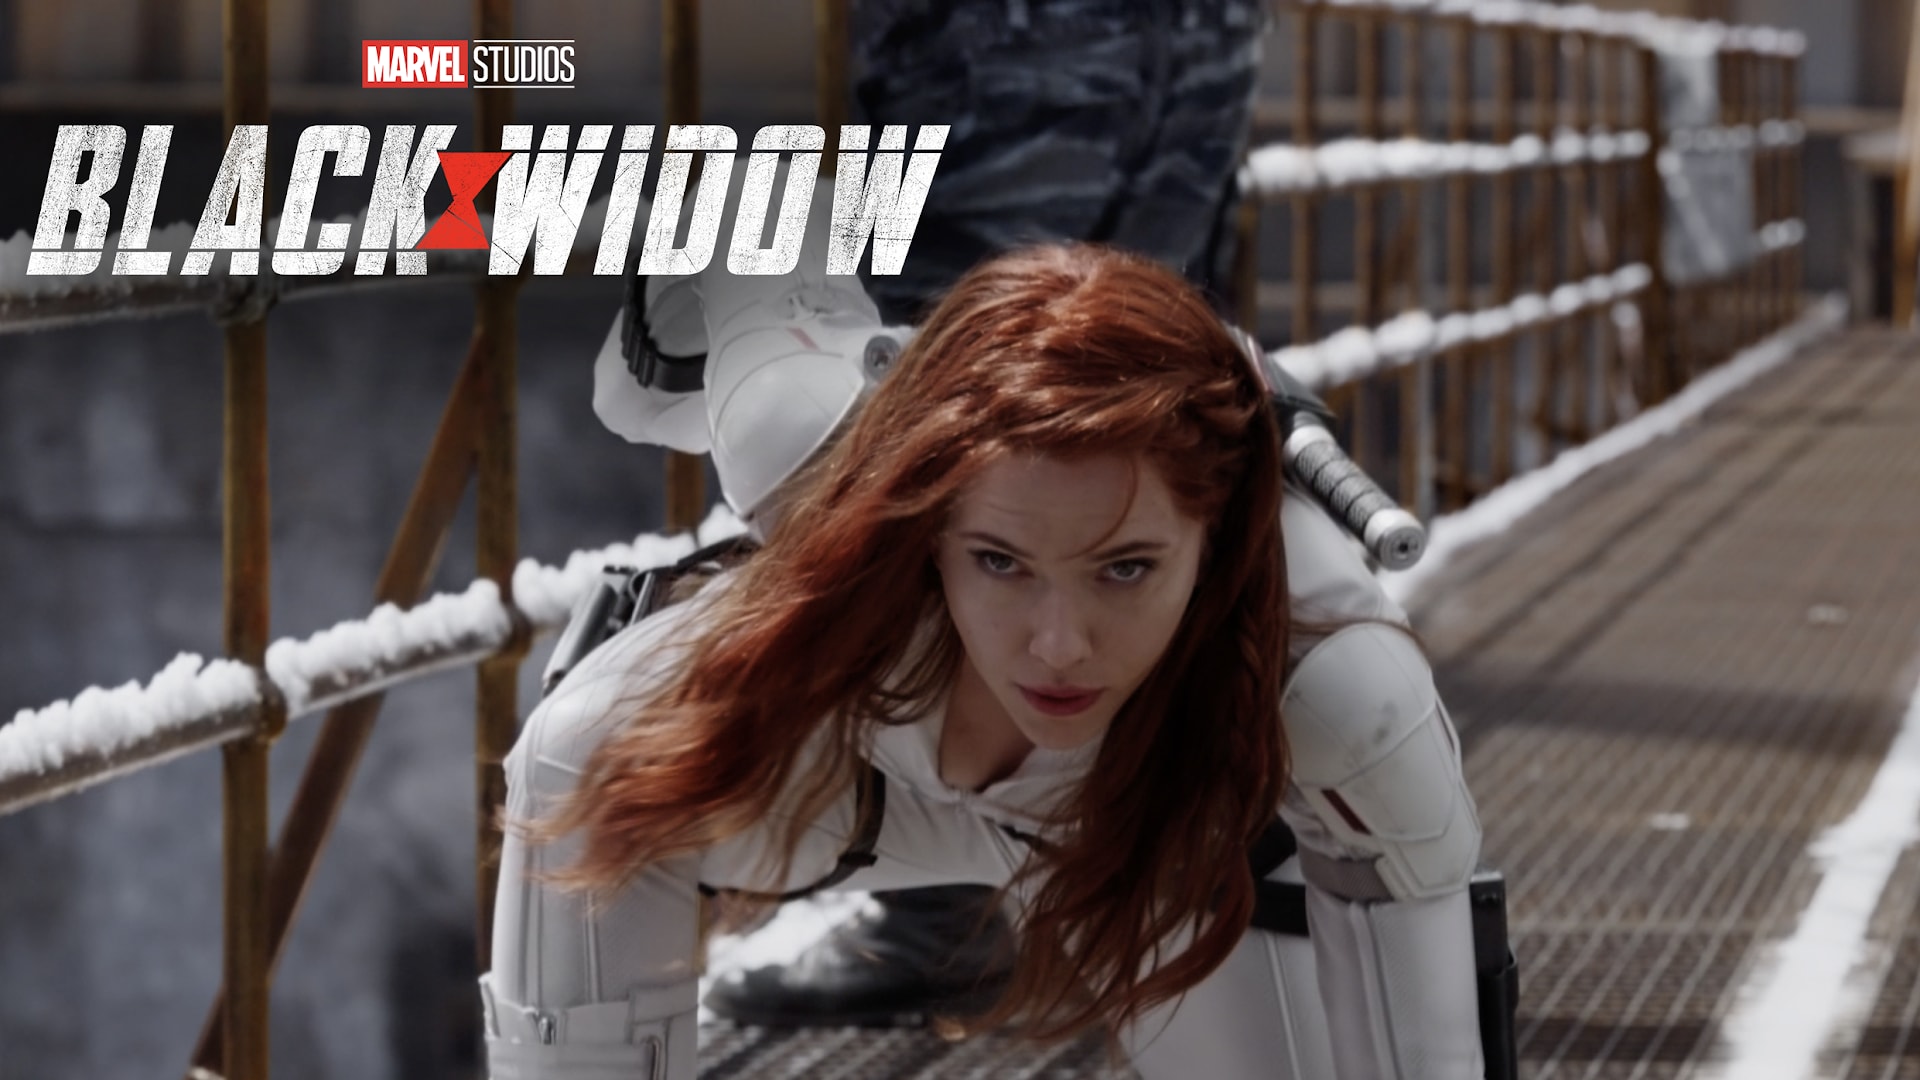 Black Widow logo with Scarlett Johansson as Natasha Romanoff